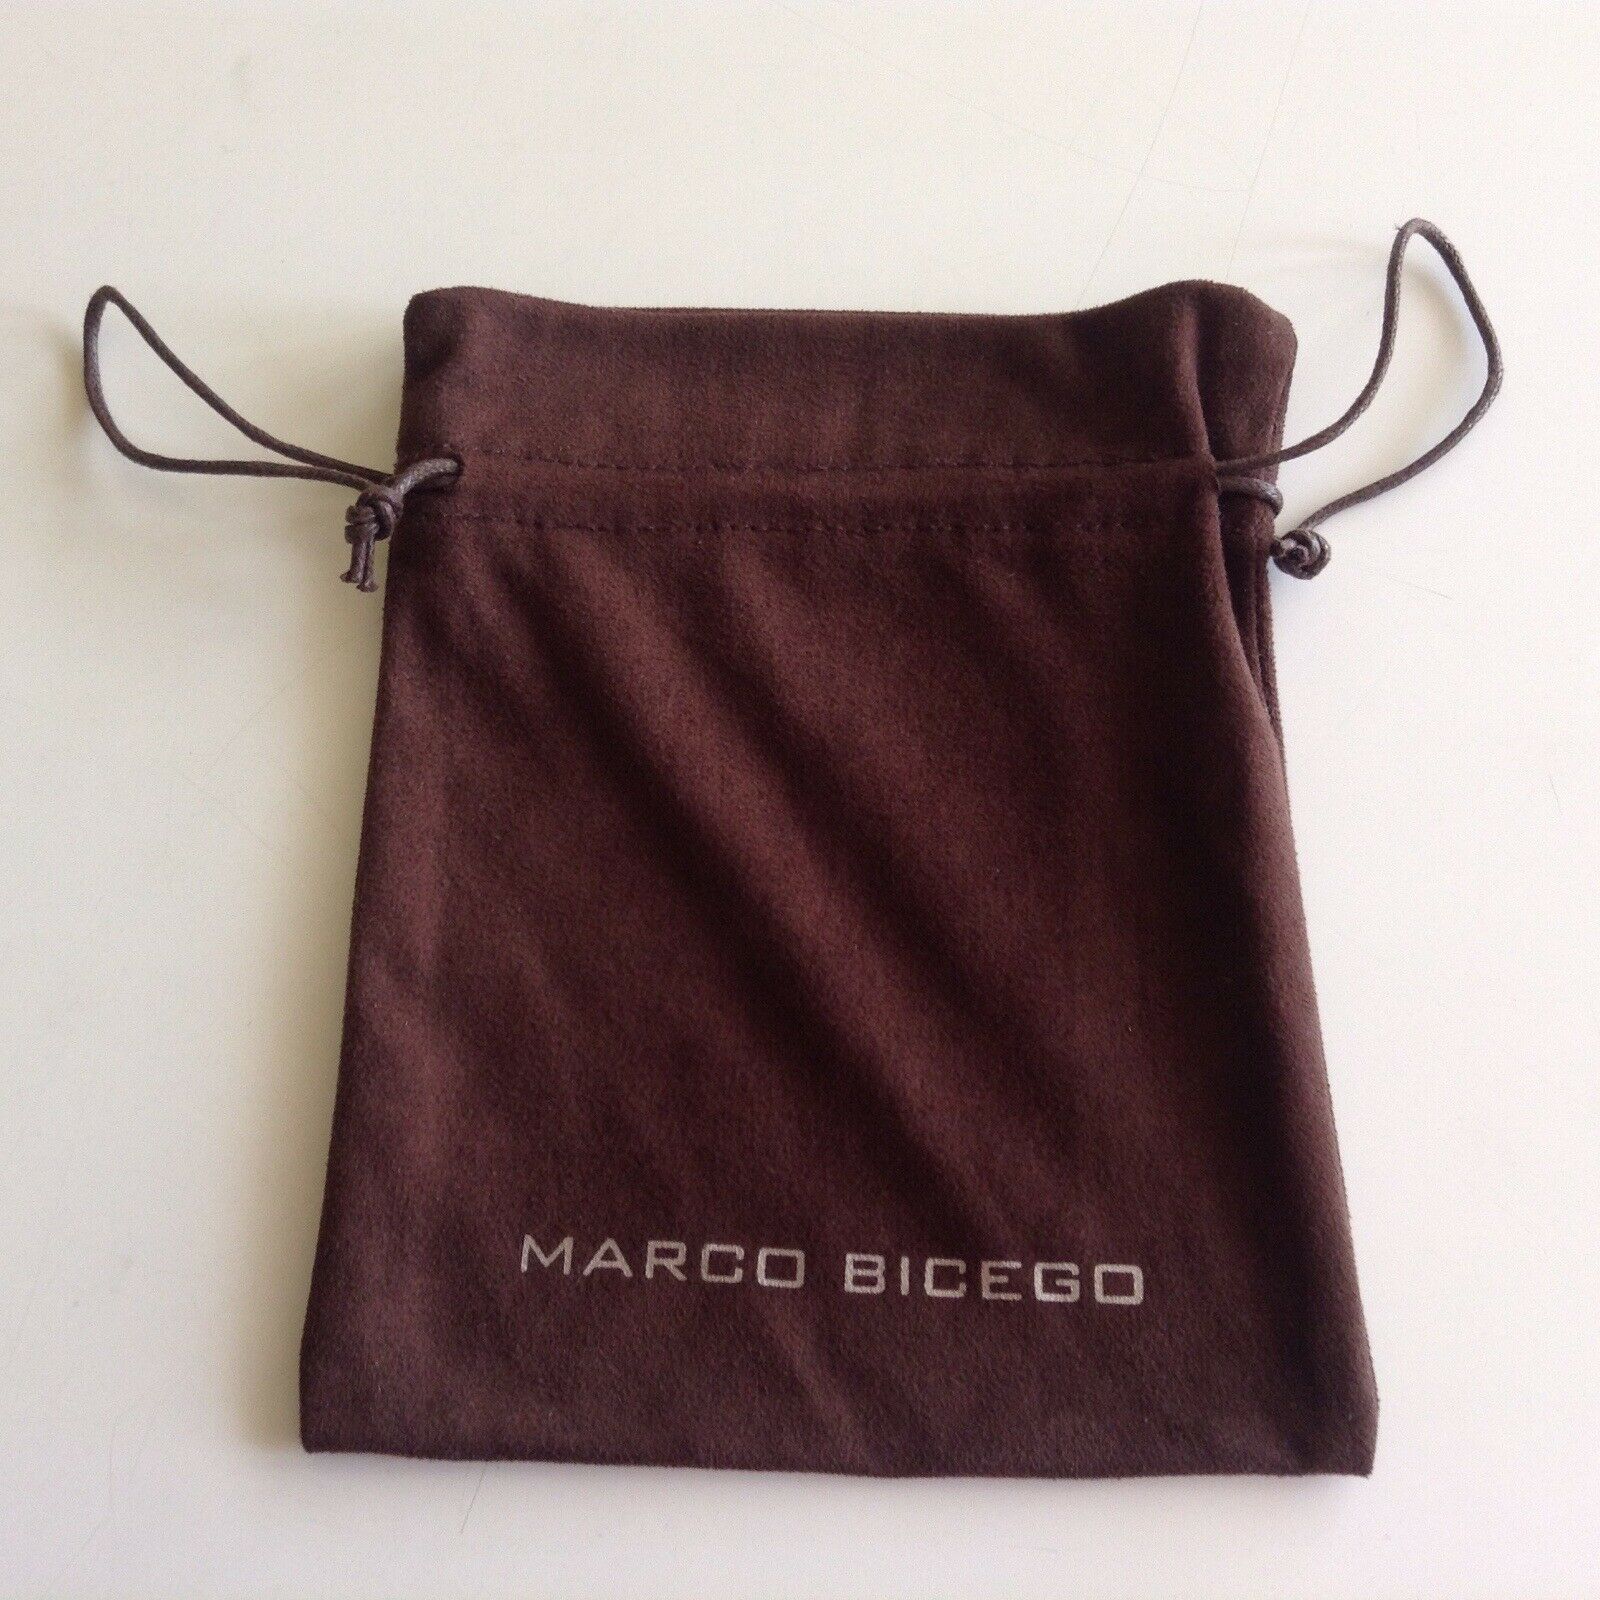 Marco Bicego Brown Jewelry Pouch 5.25 X 6.5”